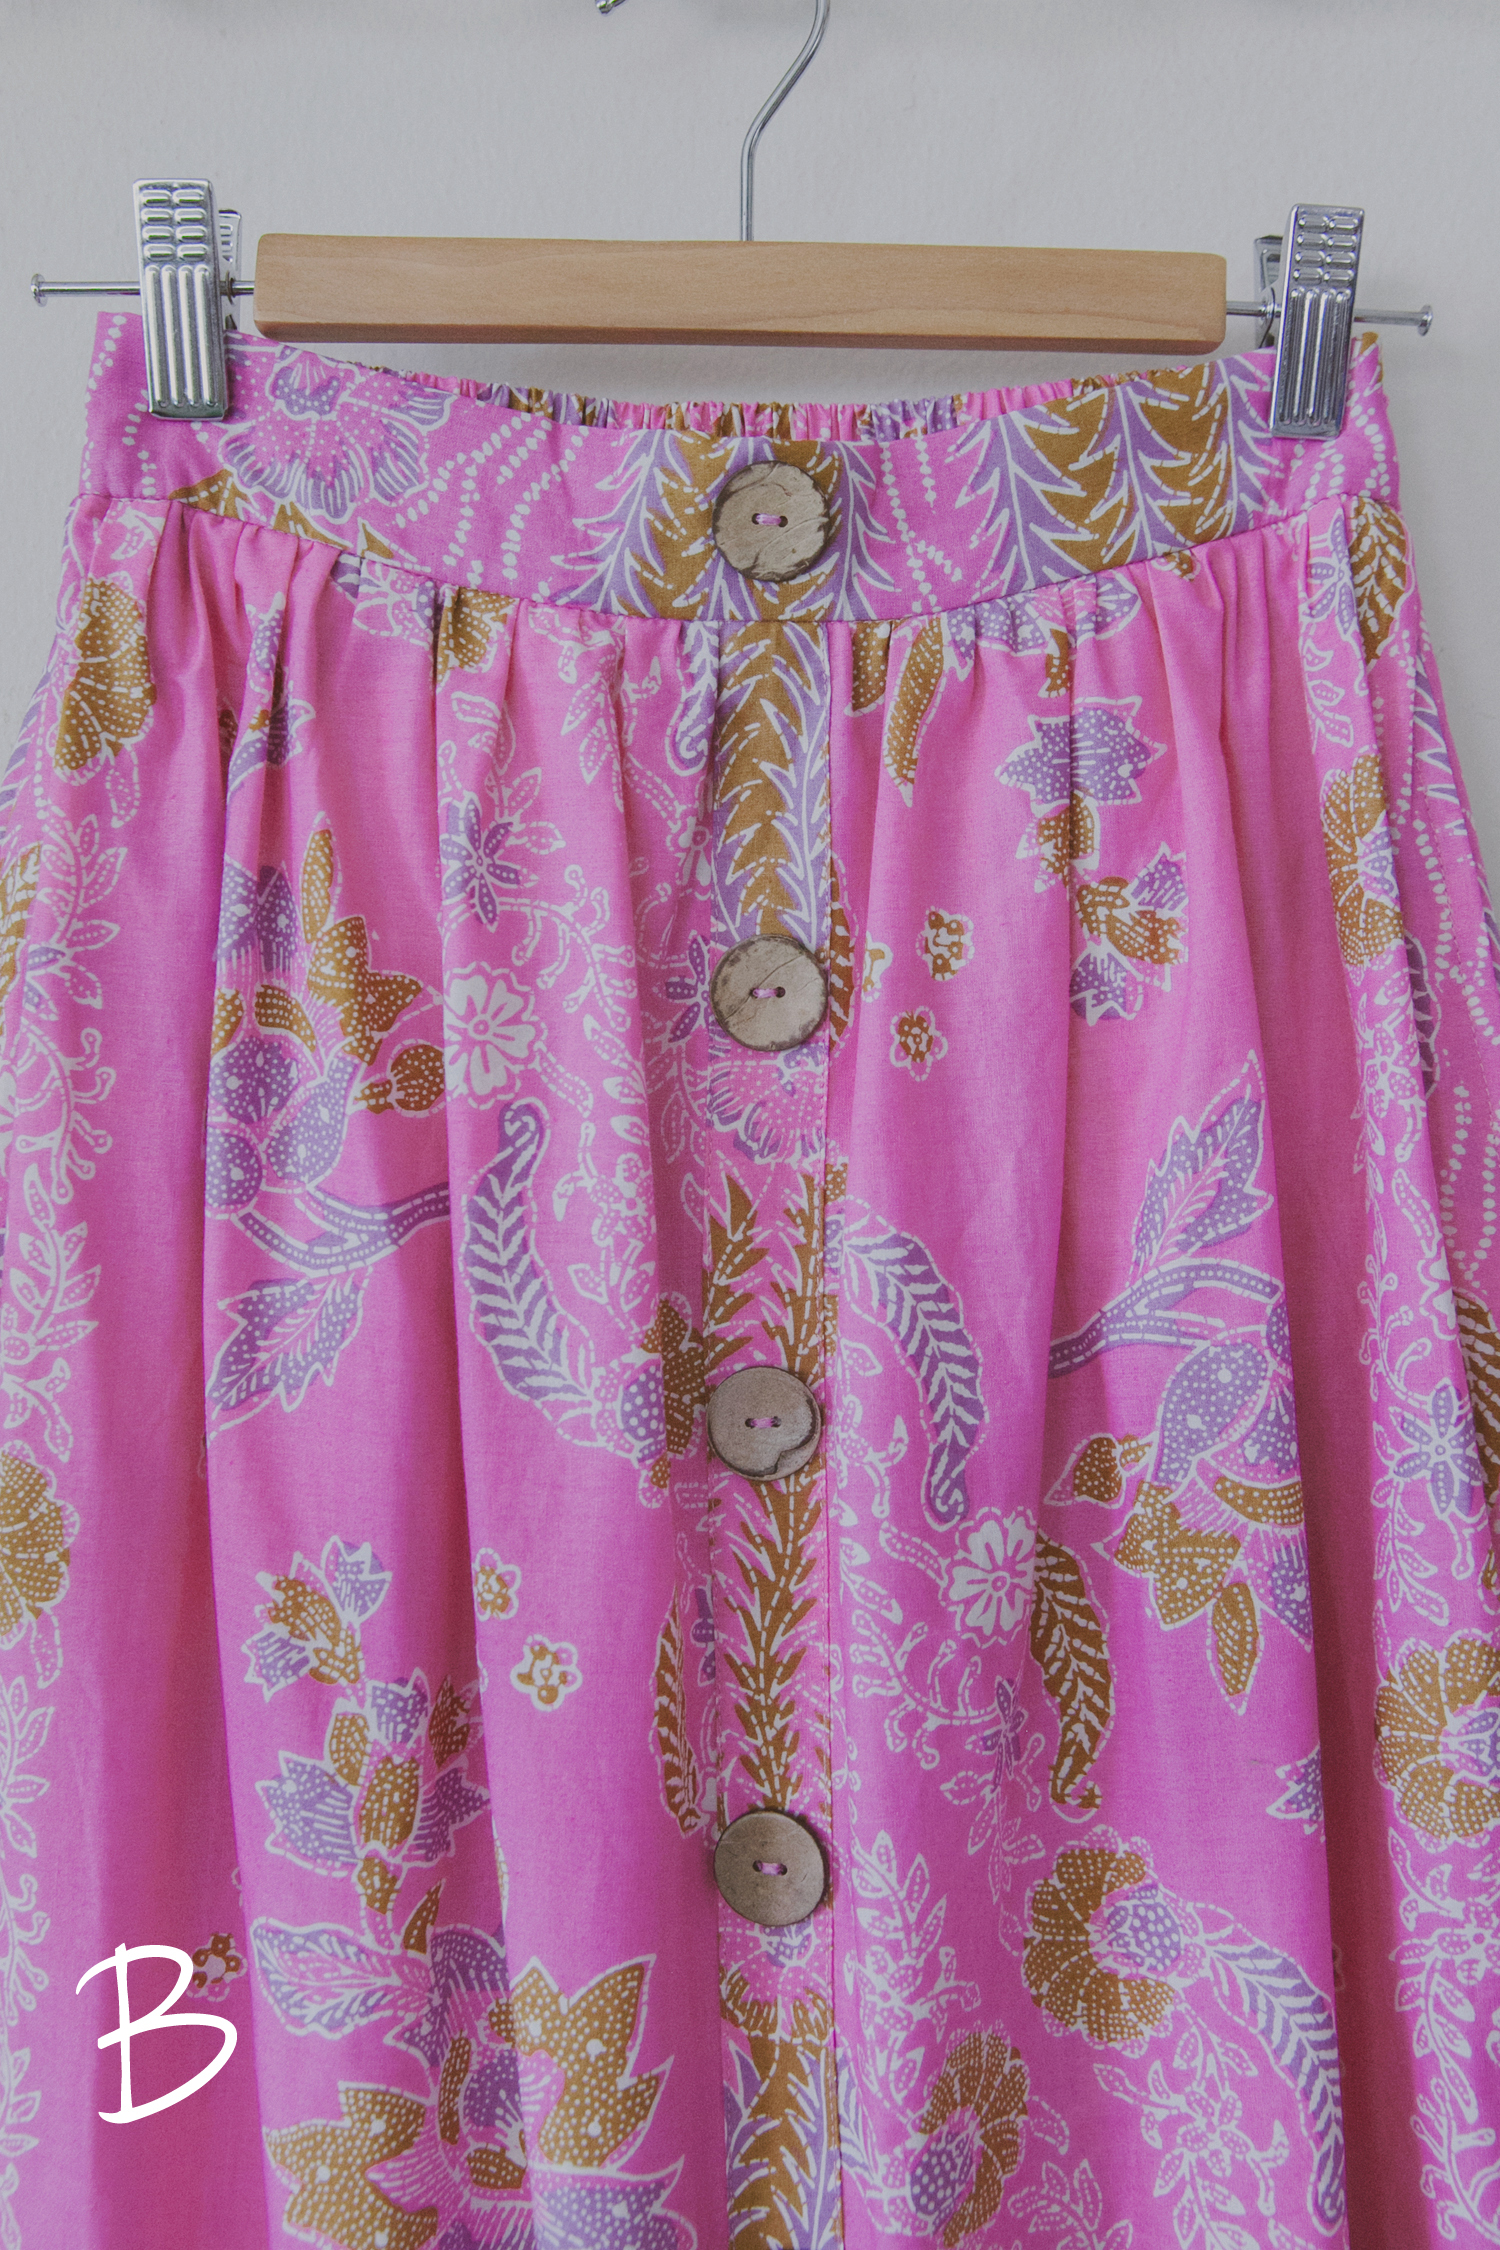 Niah+Co Batik Pleated Gathered Skirt  -06.jpg